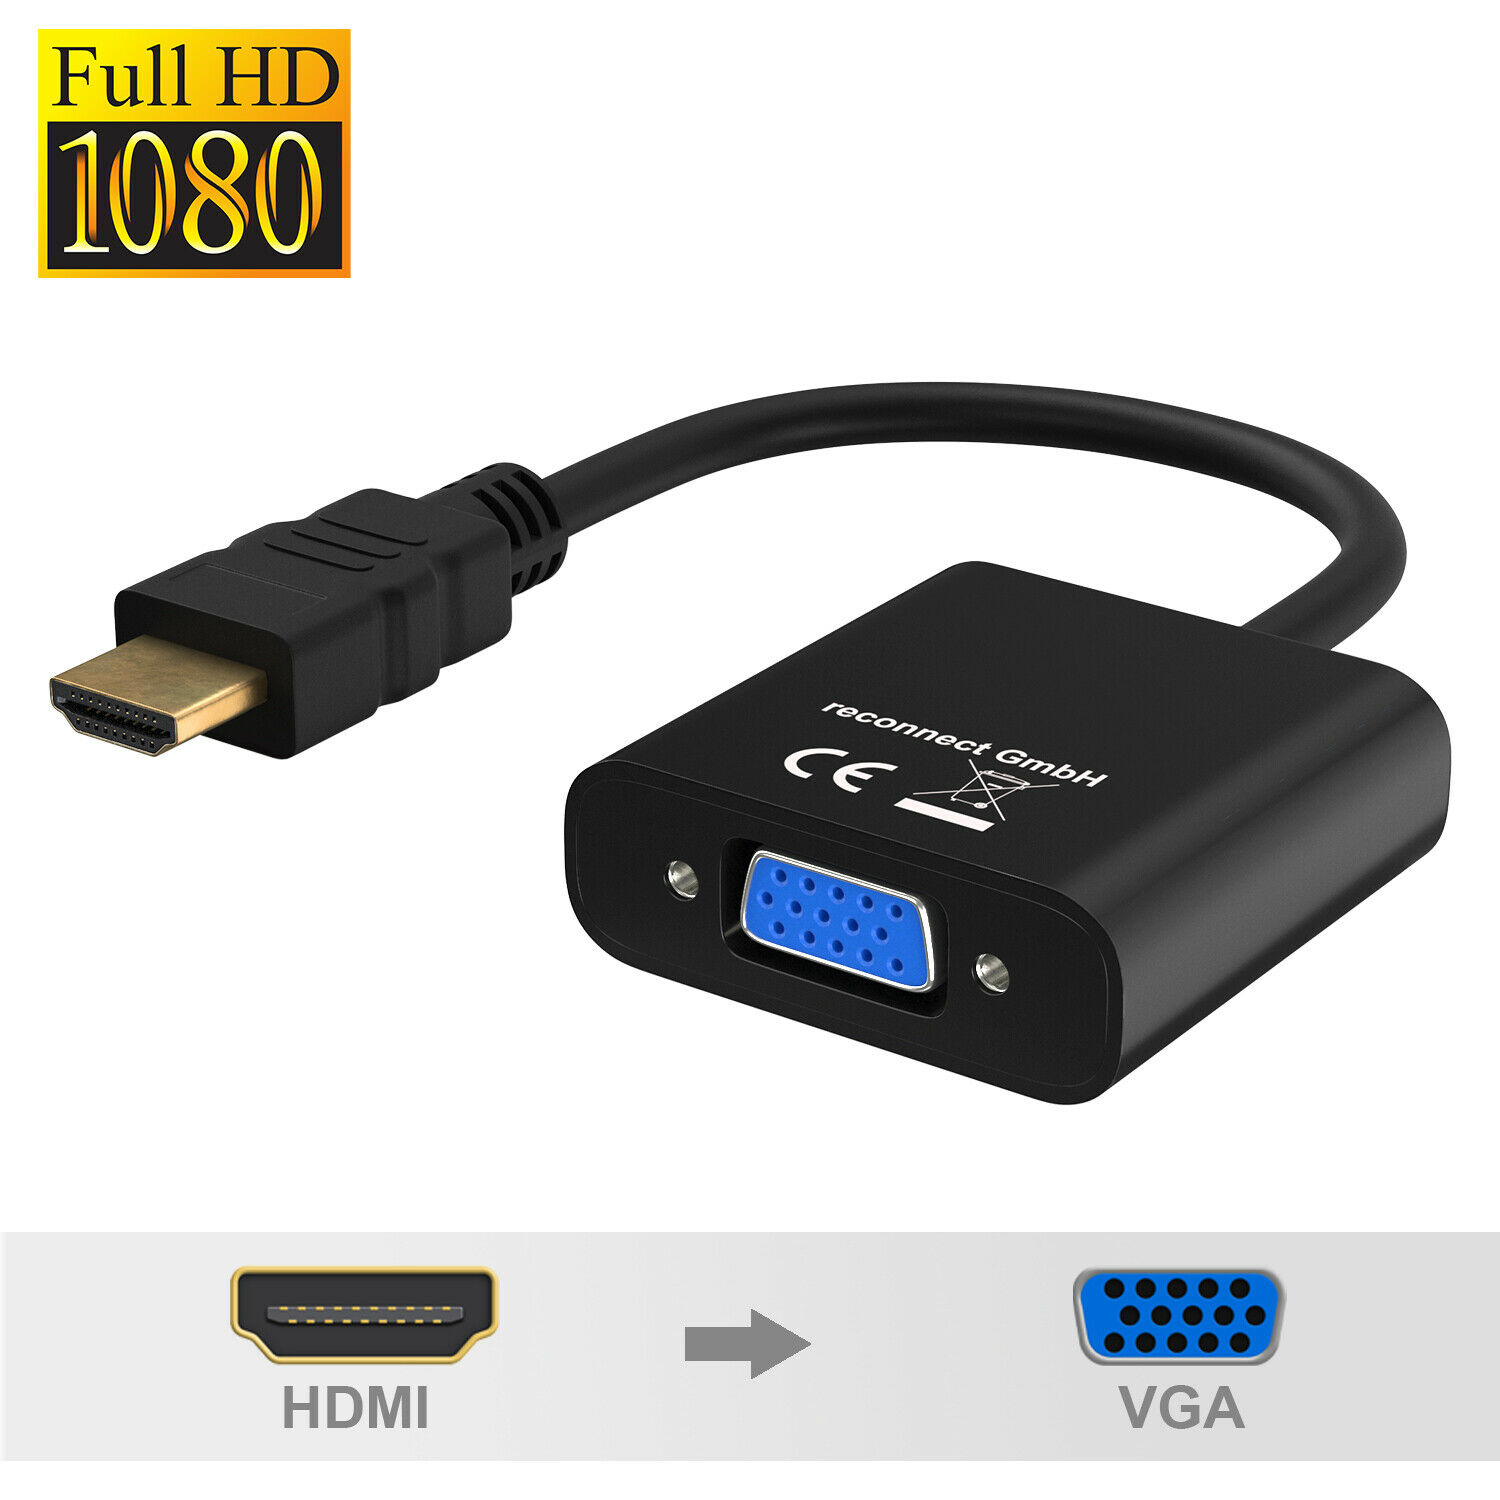 HDMI - VGA